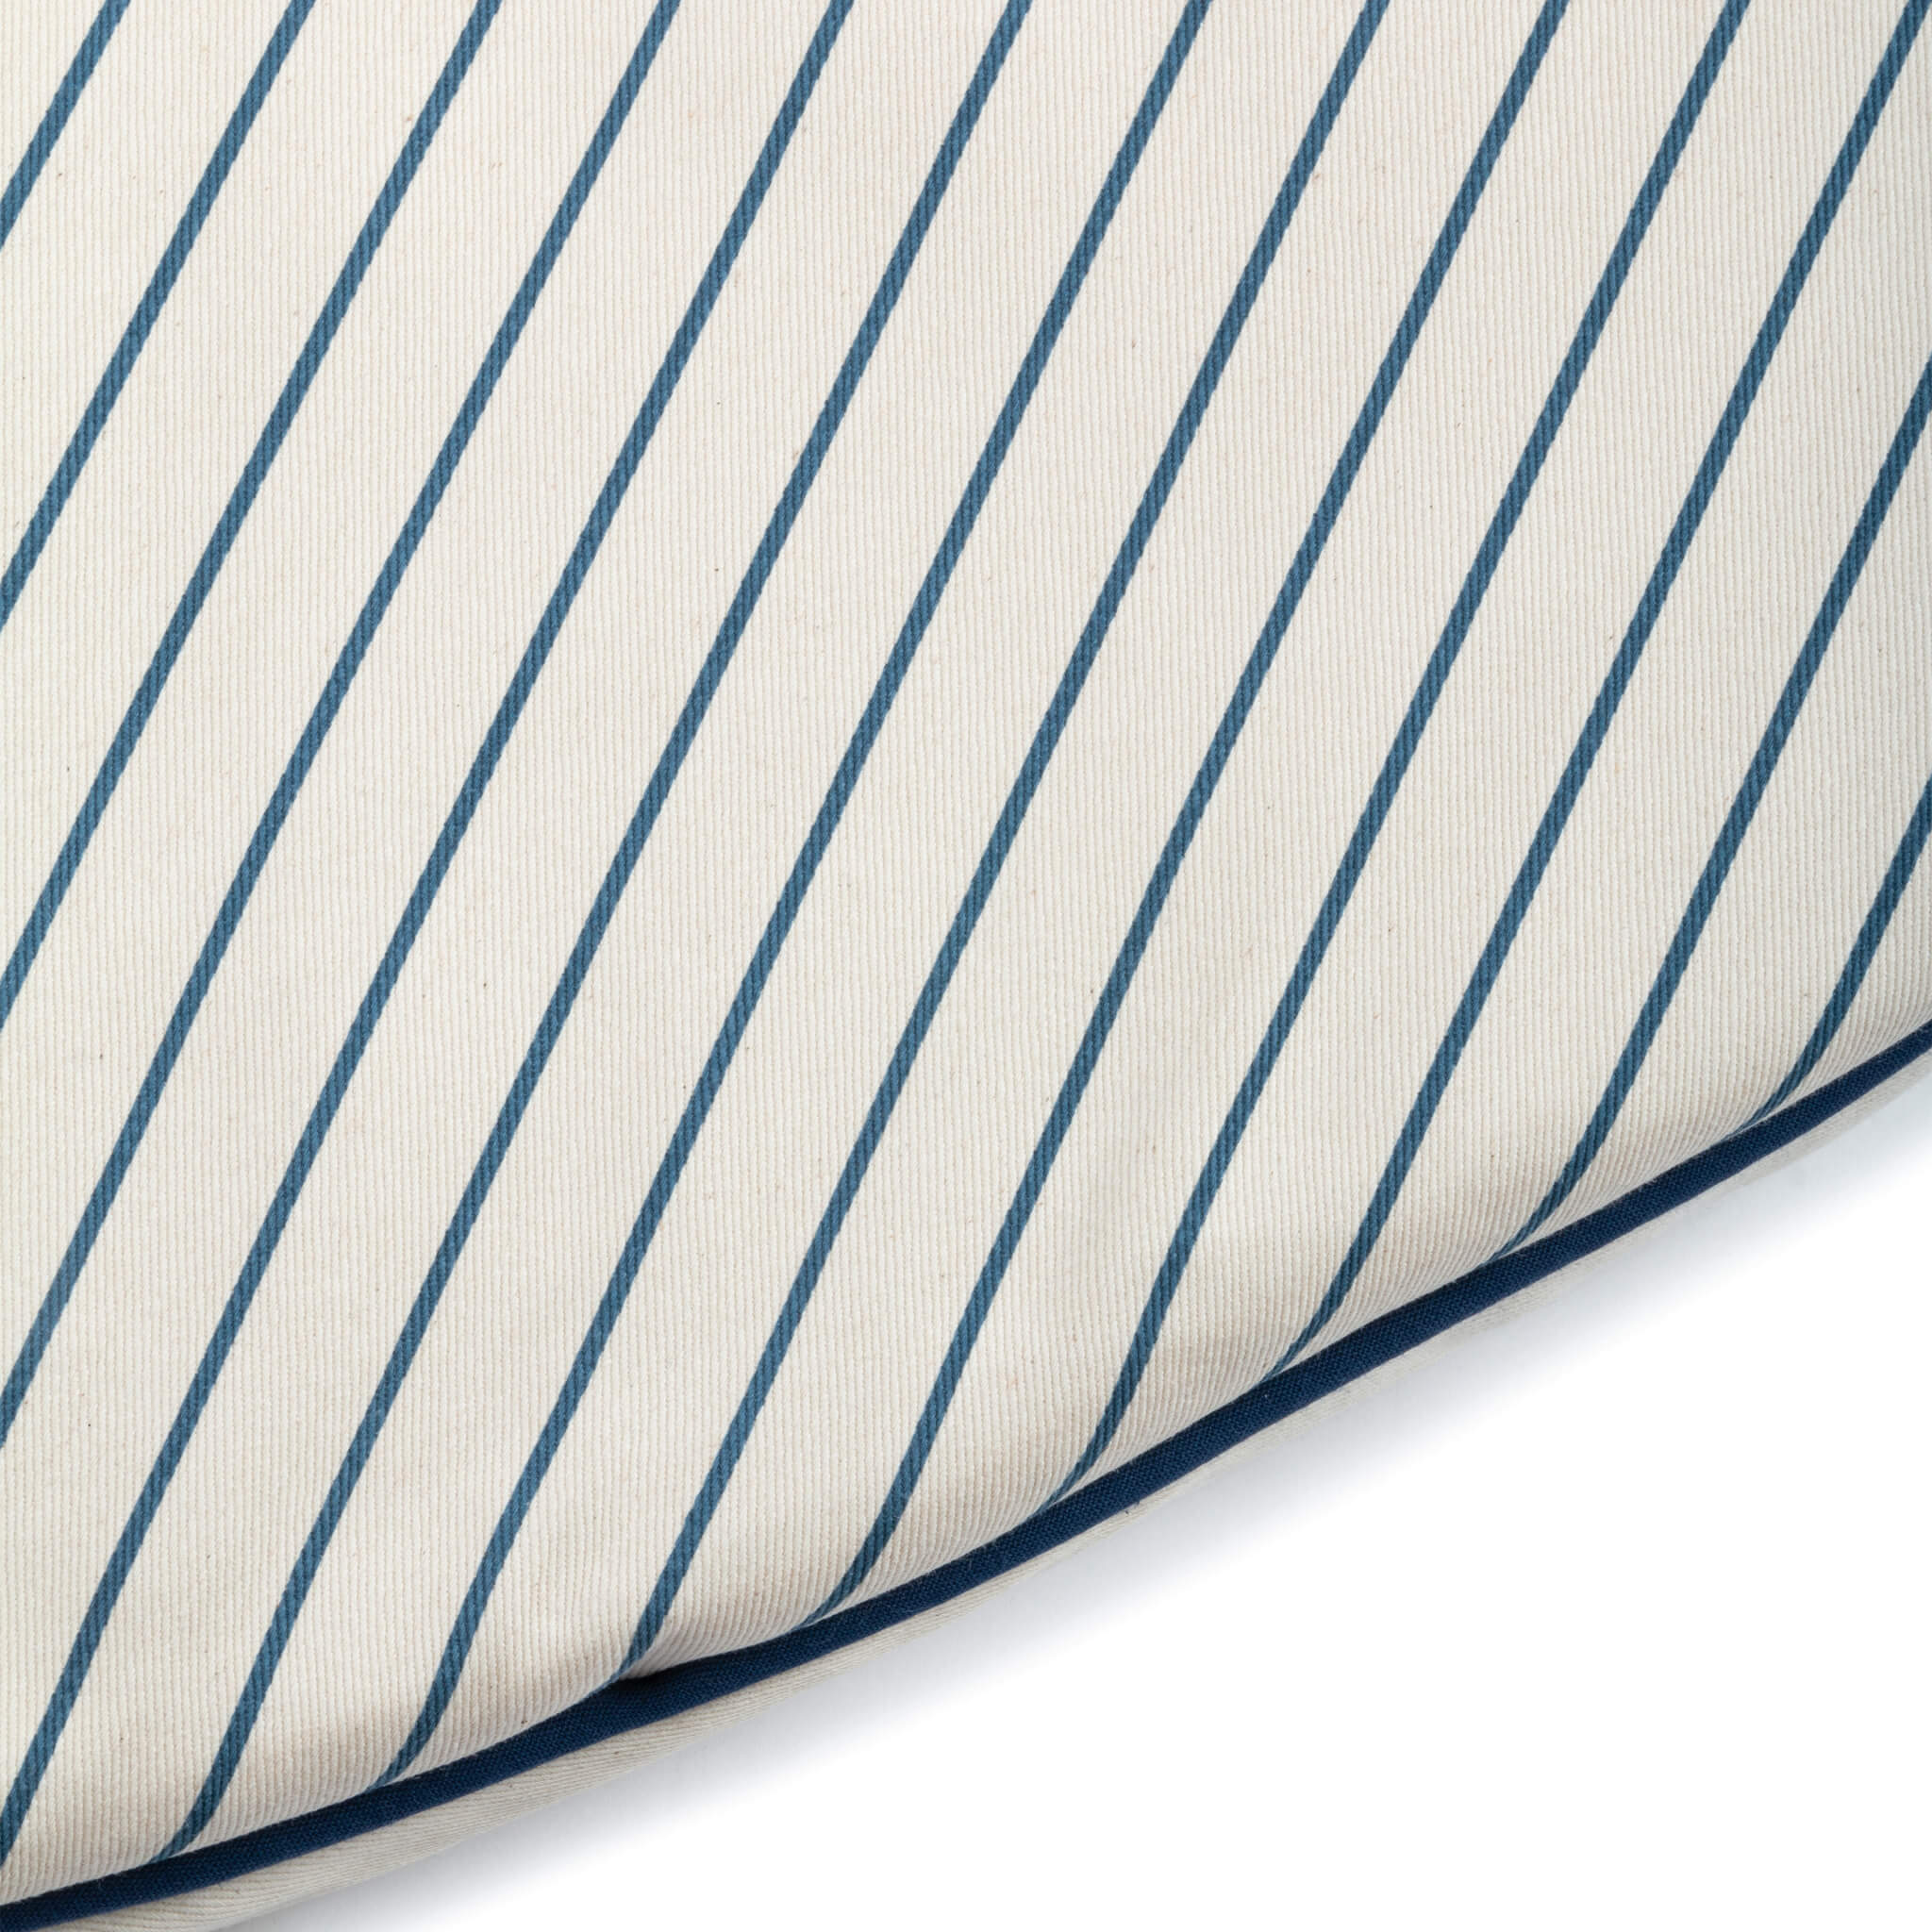 Nobodinoz Fluffy Round Playmat in Blue Stripes Details 